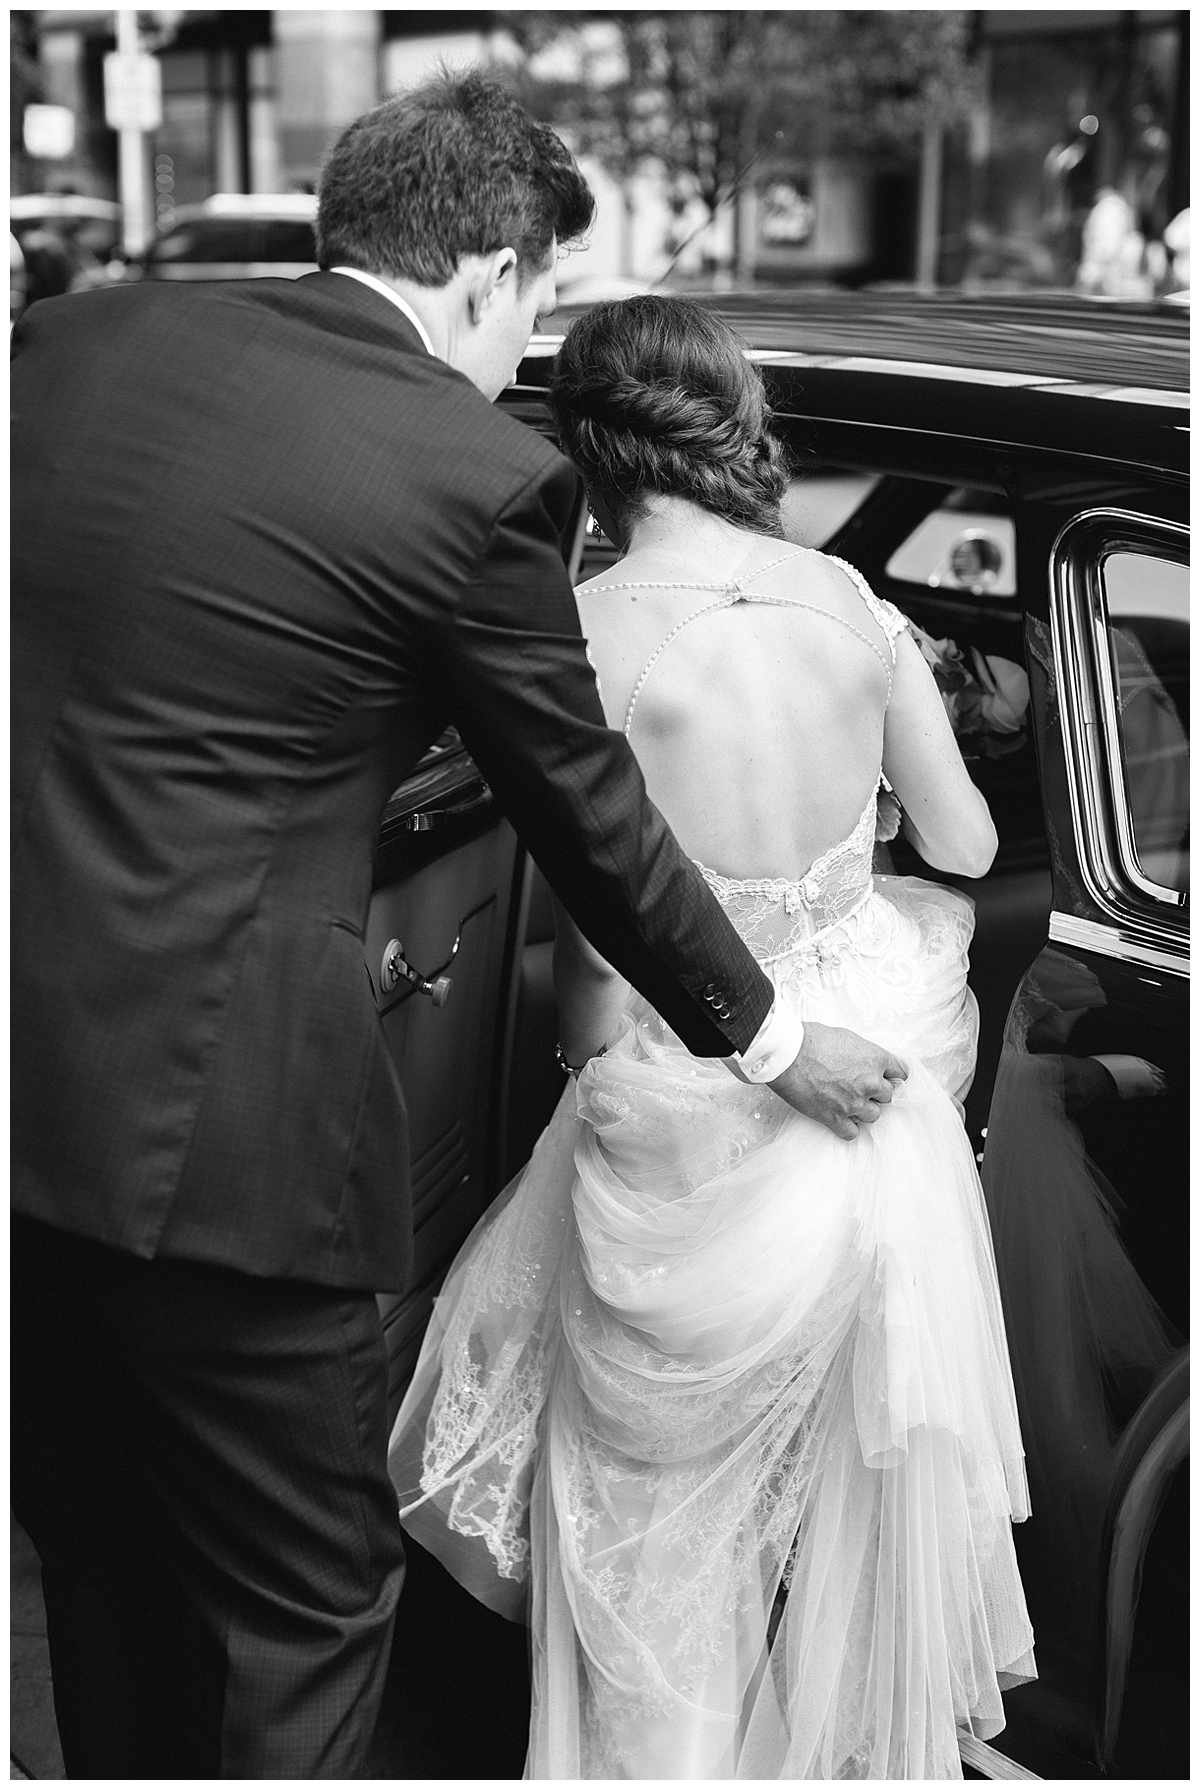 A groom helps his bride in the car 